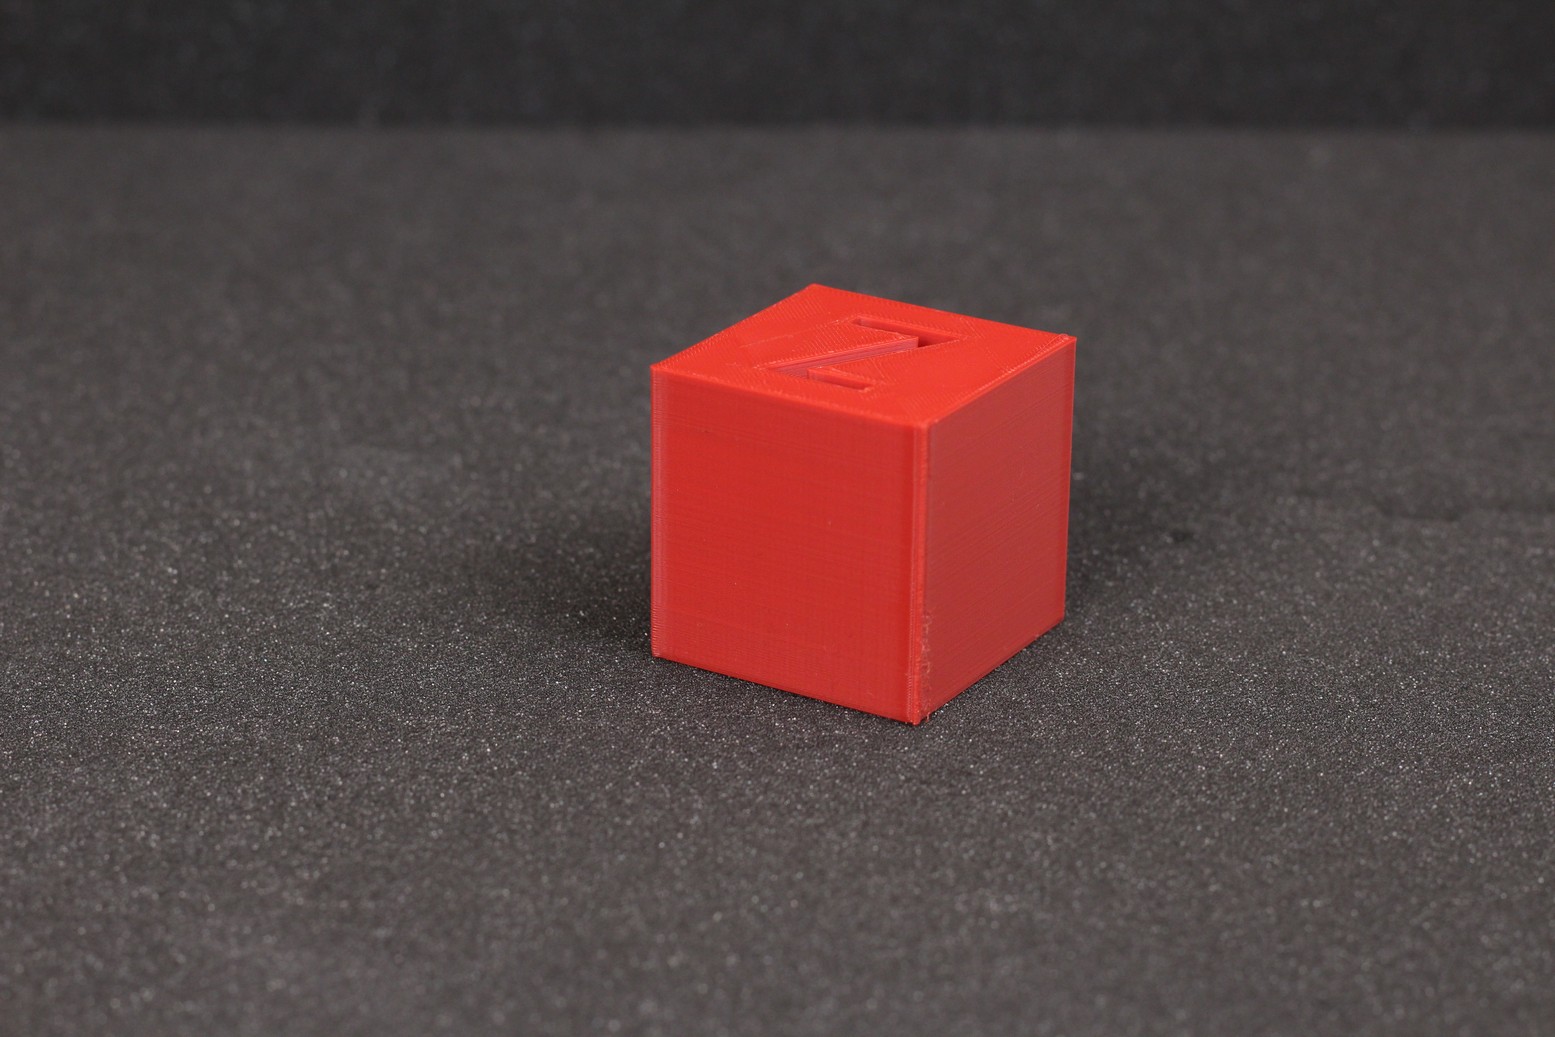 CR 200B Review ASA Calibration Cube 4 | Creality CR-200B Review: Budget Enclosed 3D Printer